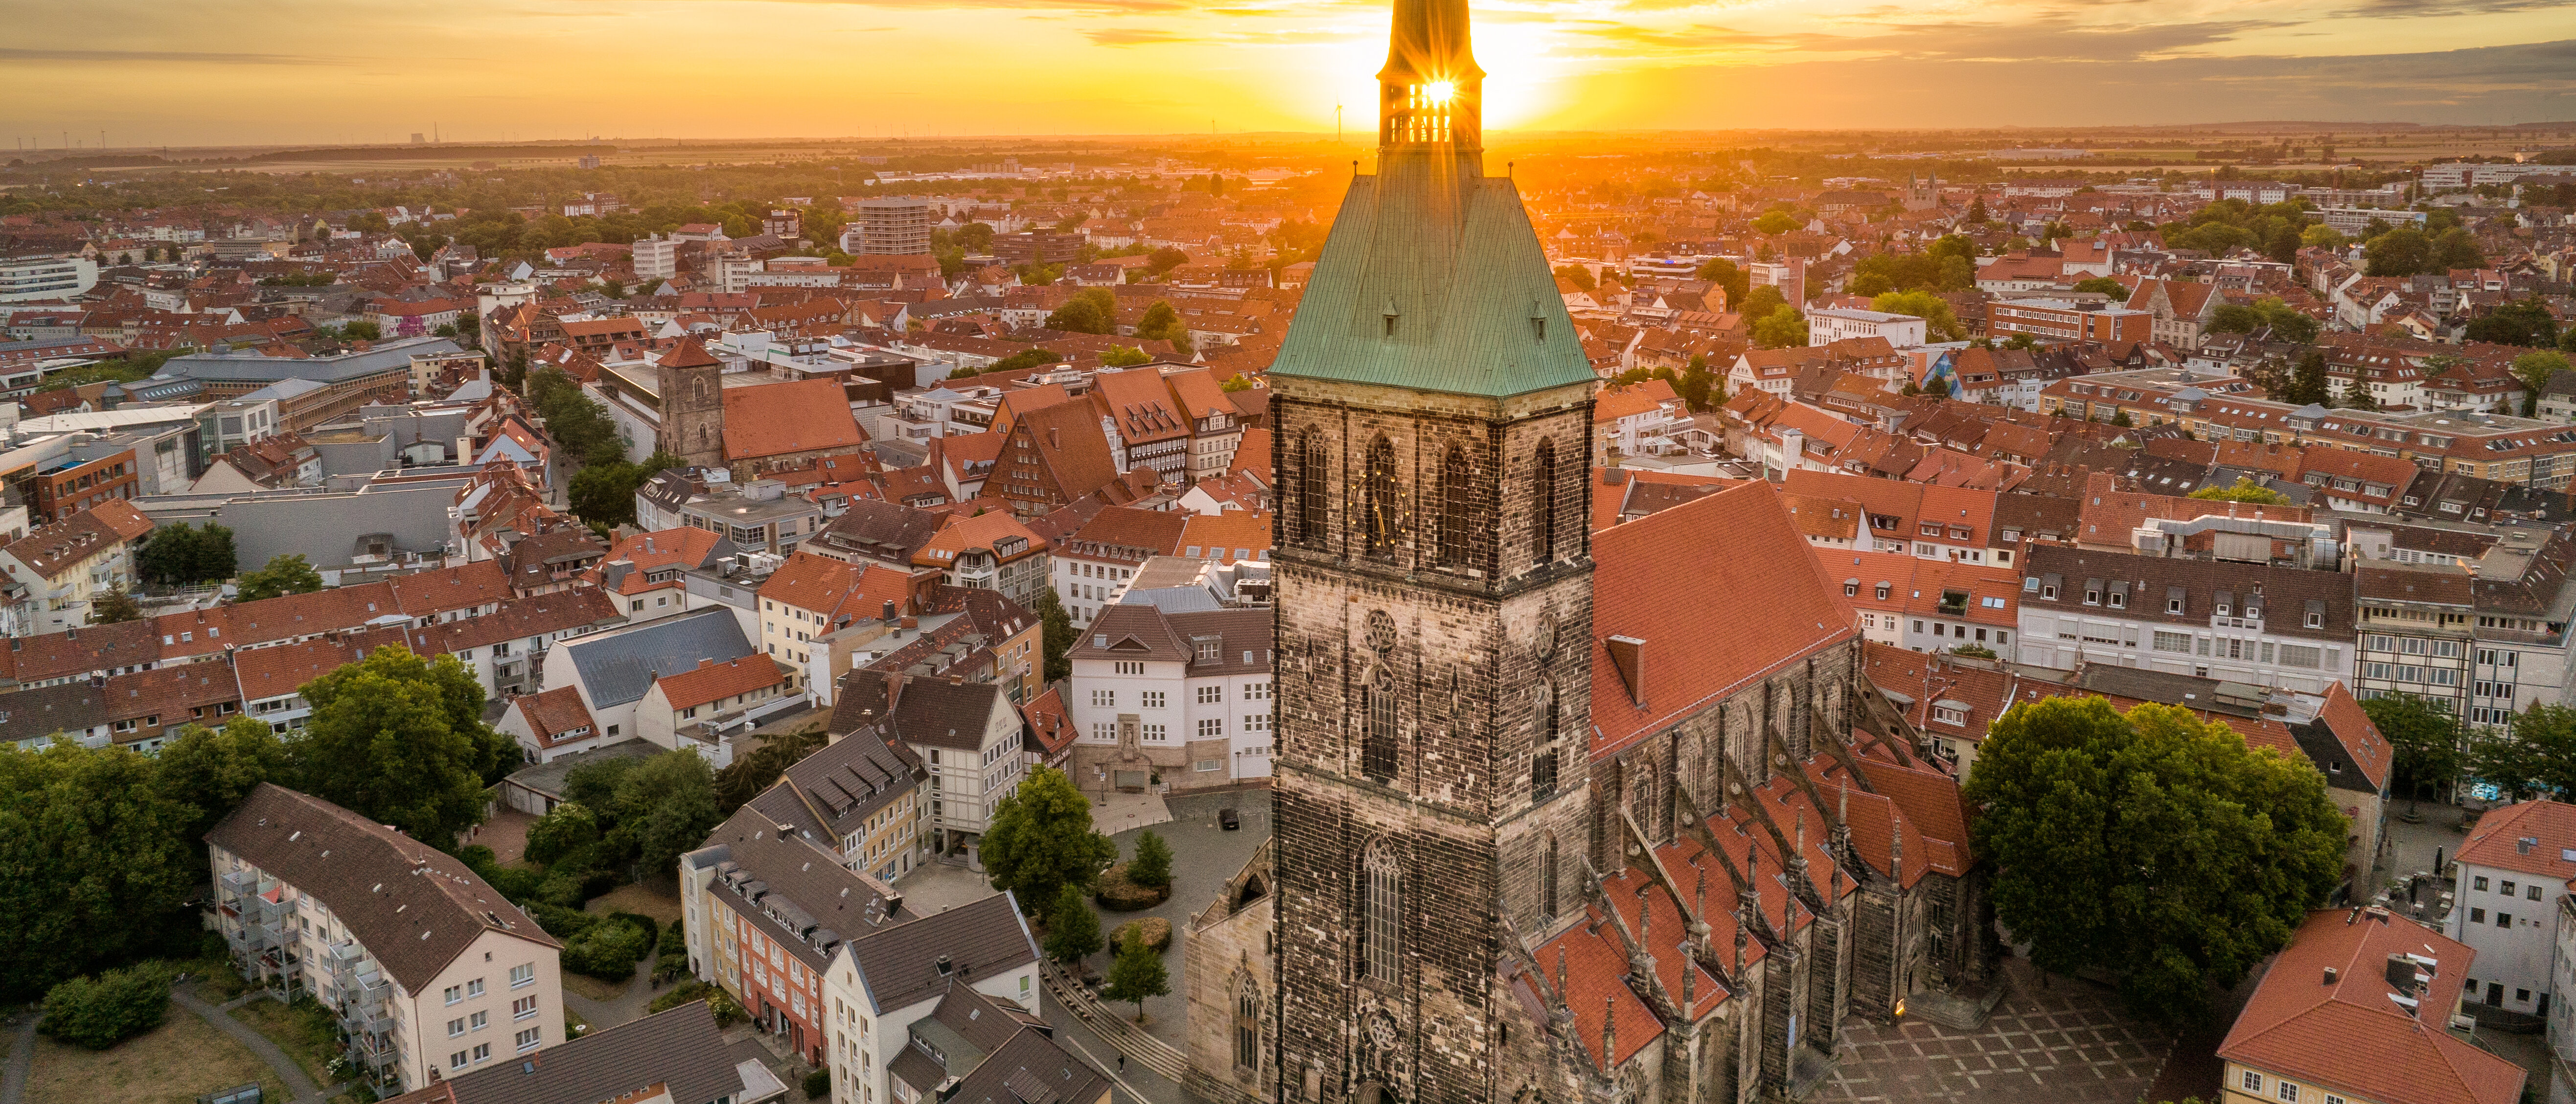 St. Andreaskirche, Blick über die Stadt, Sonnenuntergang, Kirchturmspitze